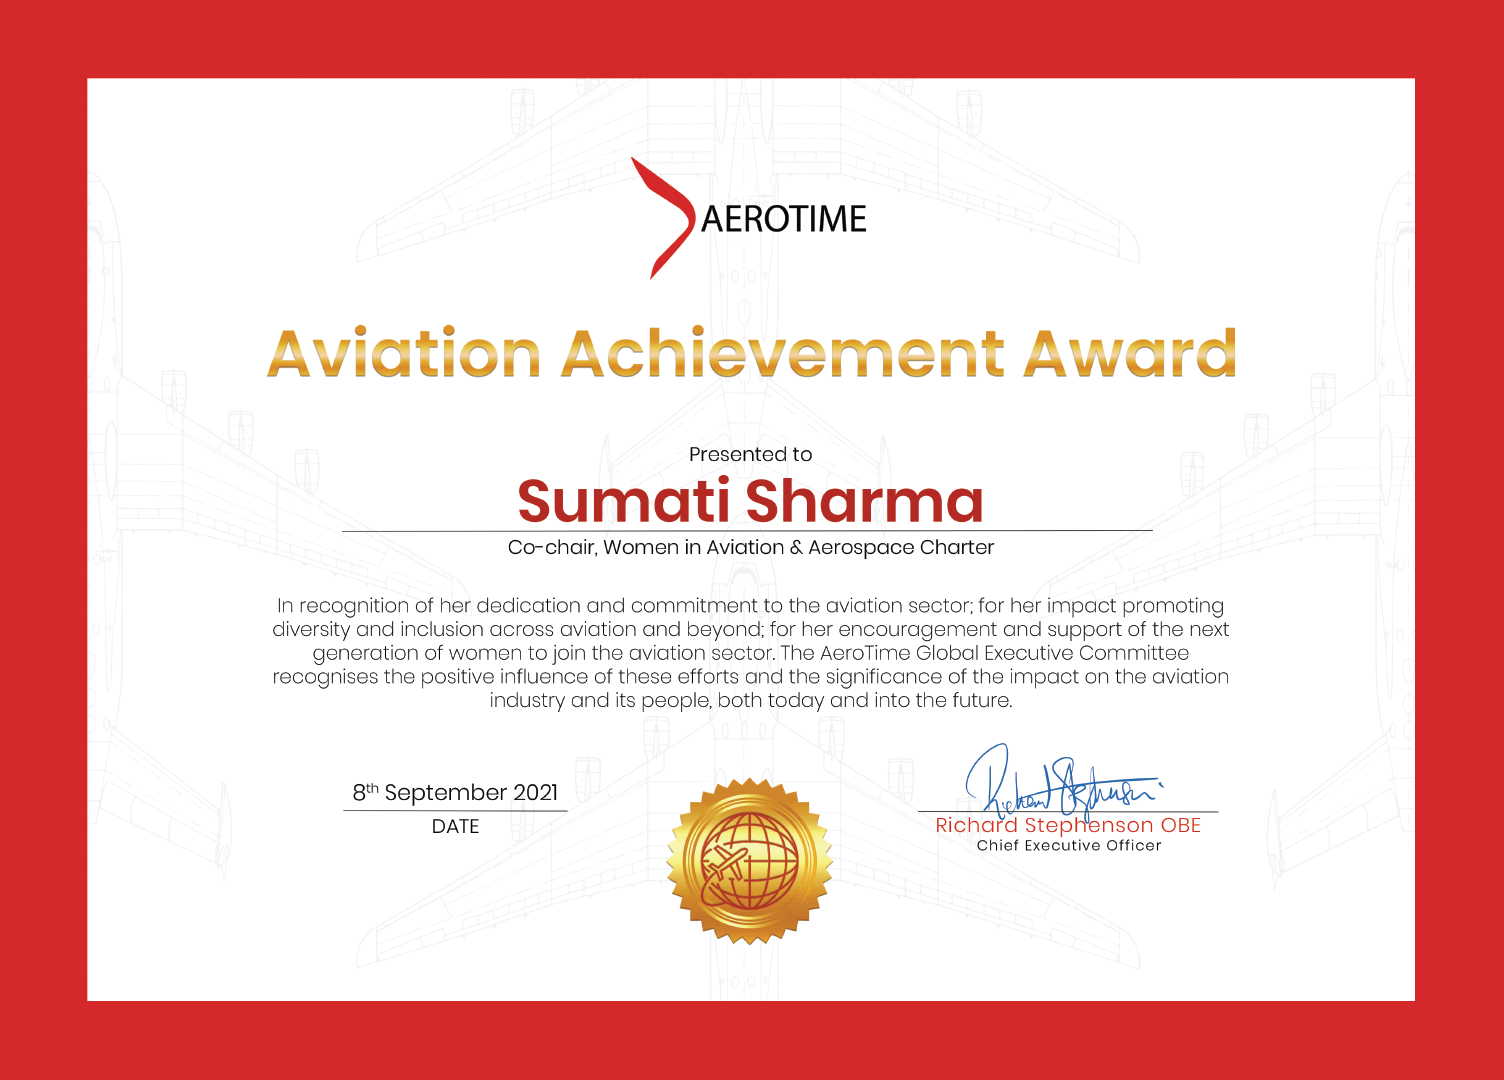 Sumati Sharma, AeroTime Aviation Achievement Award